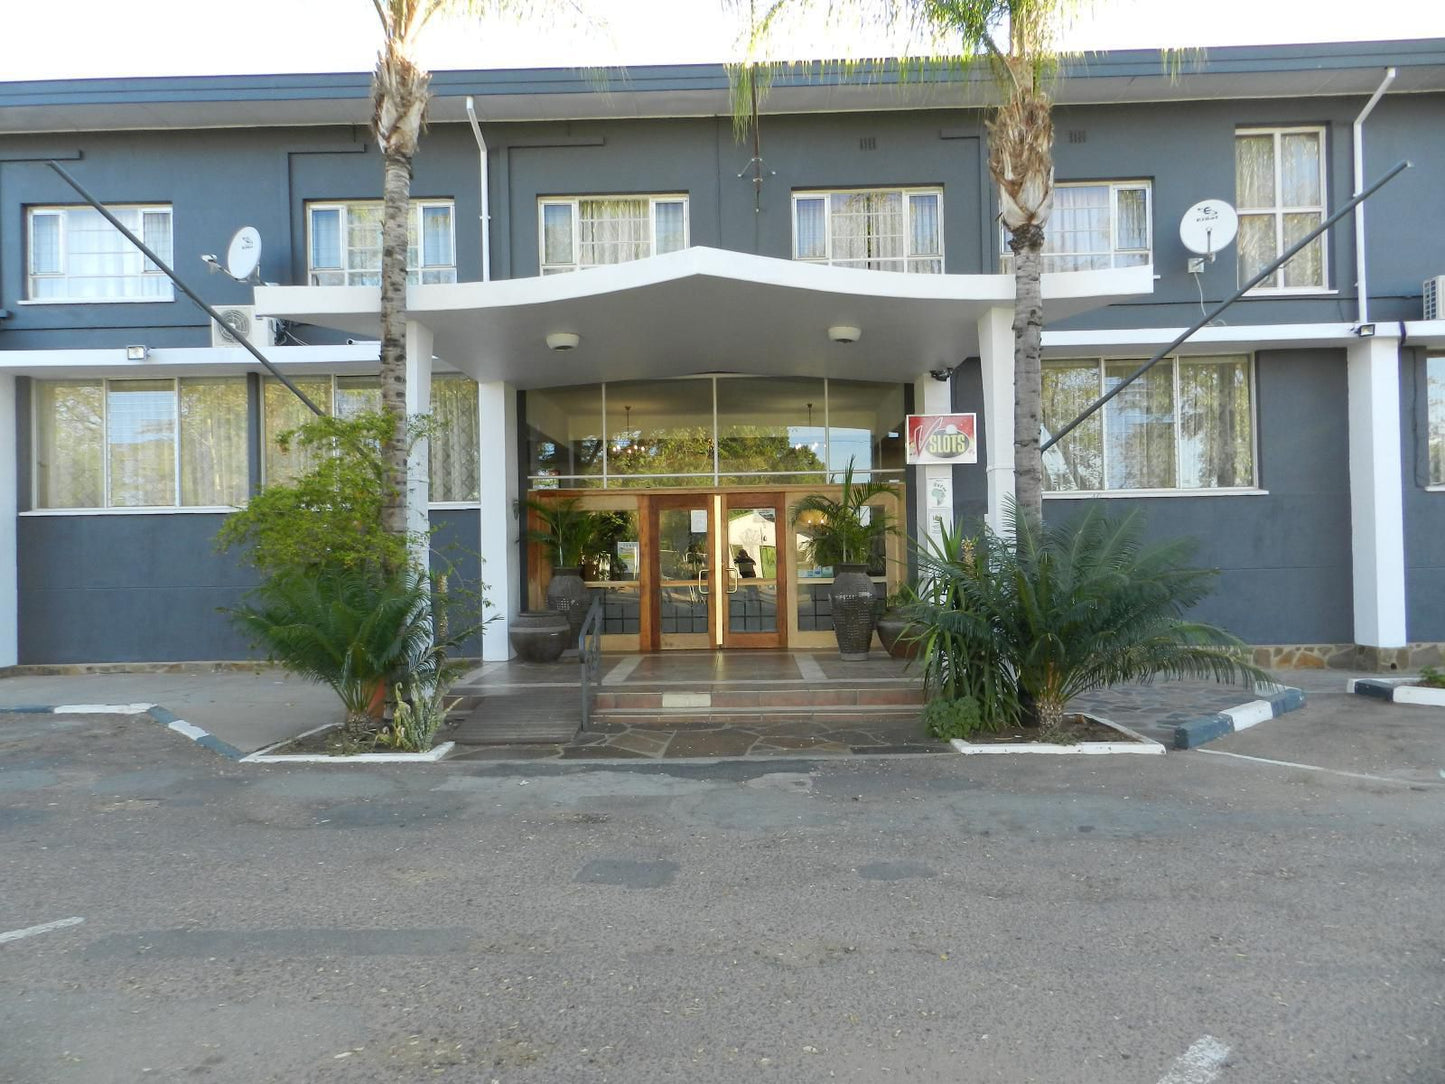 Kalahari Gateway Hotel Kakamas Northern Cape South Africa House, Building, Architecture, Palm Tree, Plant, Nature, Wood